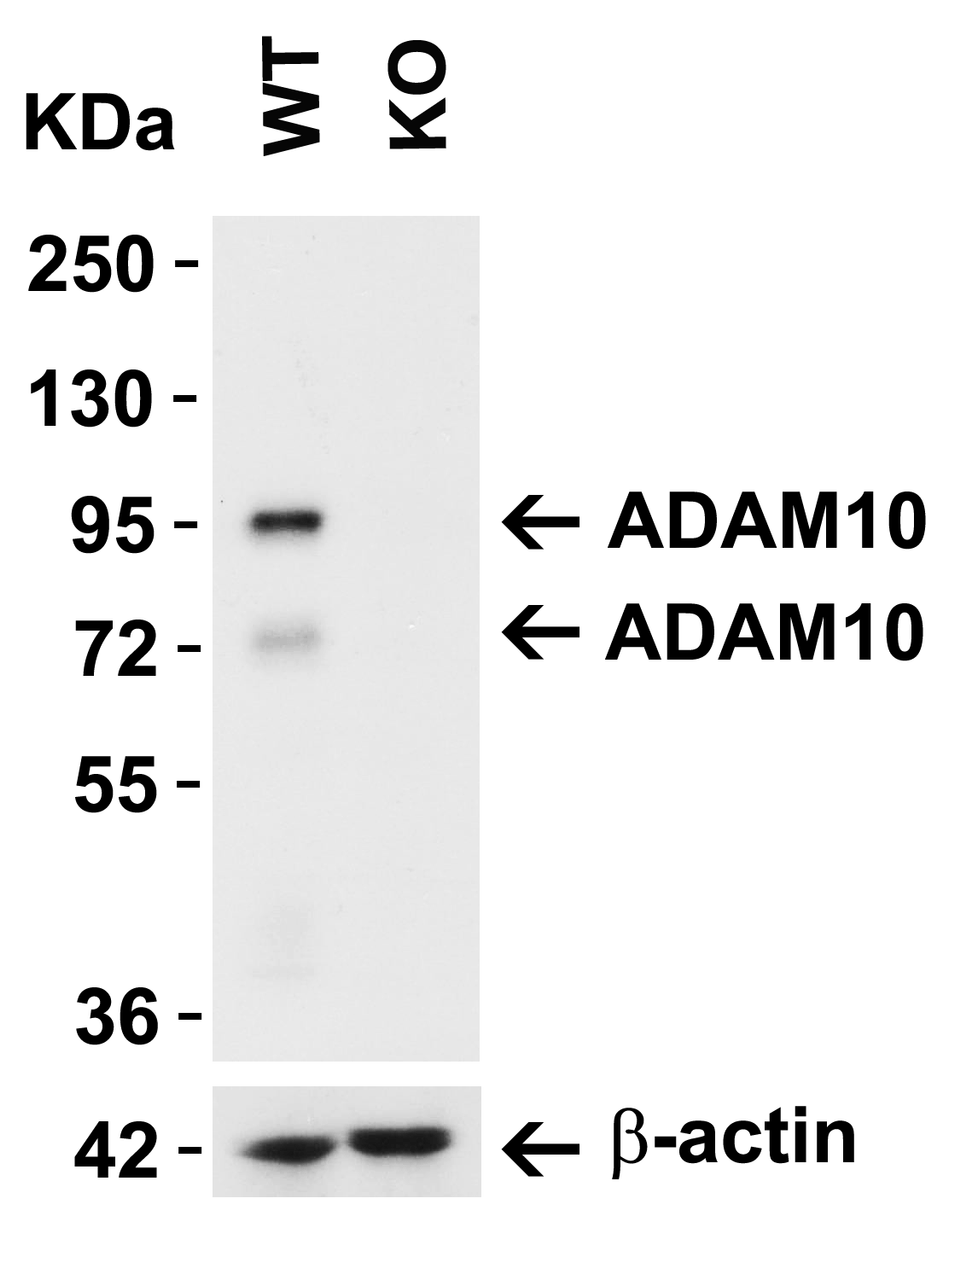 Figure 2 ADAM10 KO Validation in 293 Cells 
Loading: 15 ug of lysate 
Antibodies: ADAM10 2051, 2 ug/mL and beta-actin 3779-1301, 1ug/mL, 1 h incubation at RT in 5% NFDM/TBST. 
Secondary: Goat Anti-Rabbit IgG HRP conjugate at 1:10000 dilution.
2051 detected both precursor ADAM10 (94KD) and mature ADAM10 (68kD) .